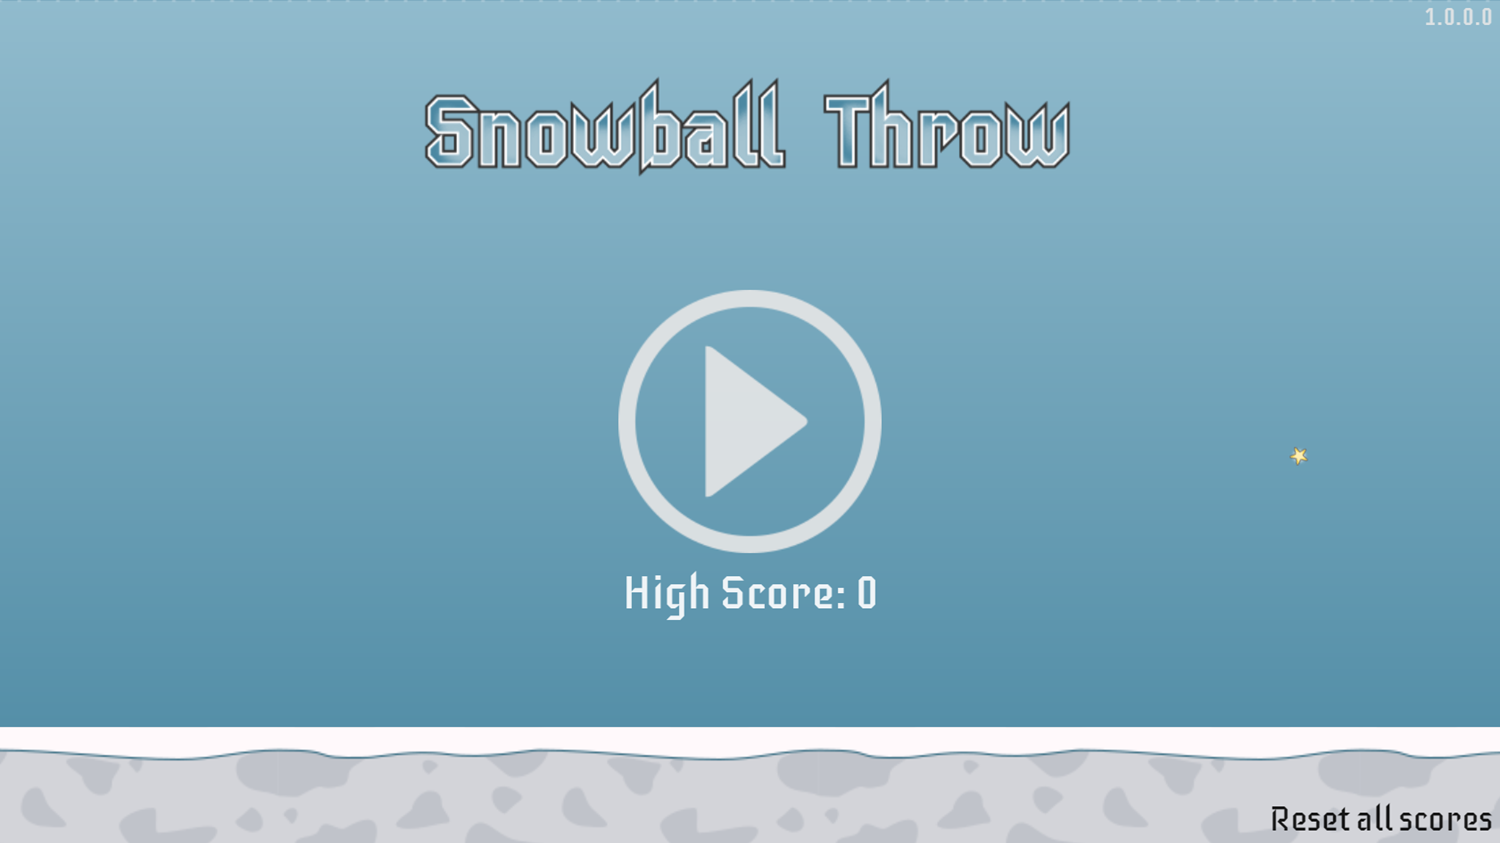 Snowball Throw Game Welcome Screen Screenshot.